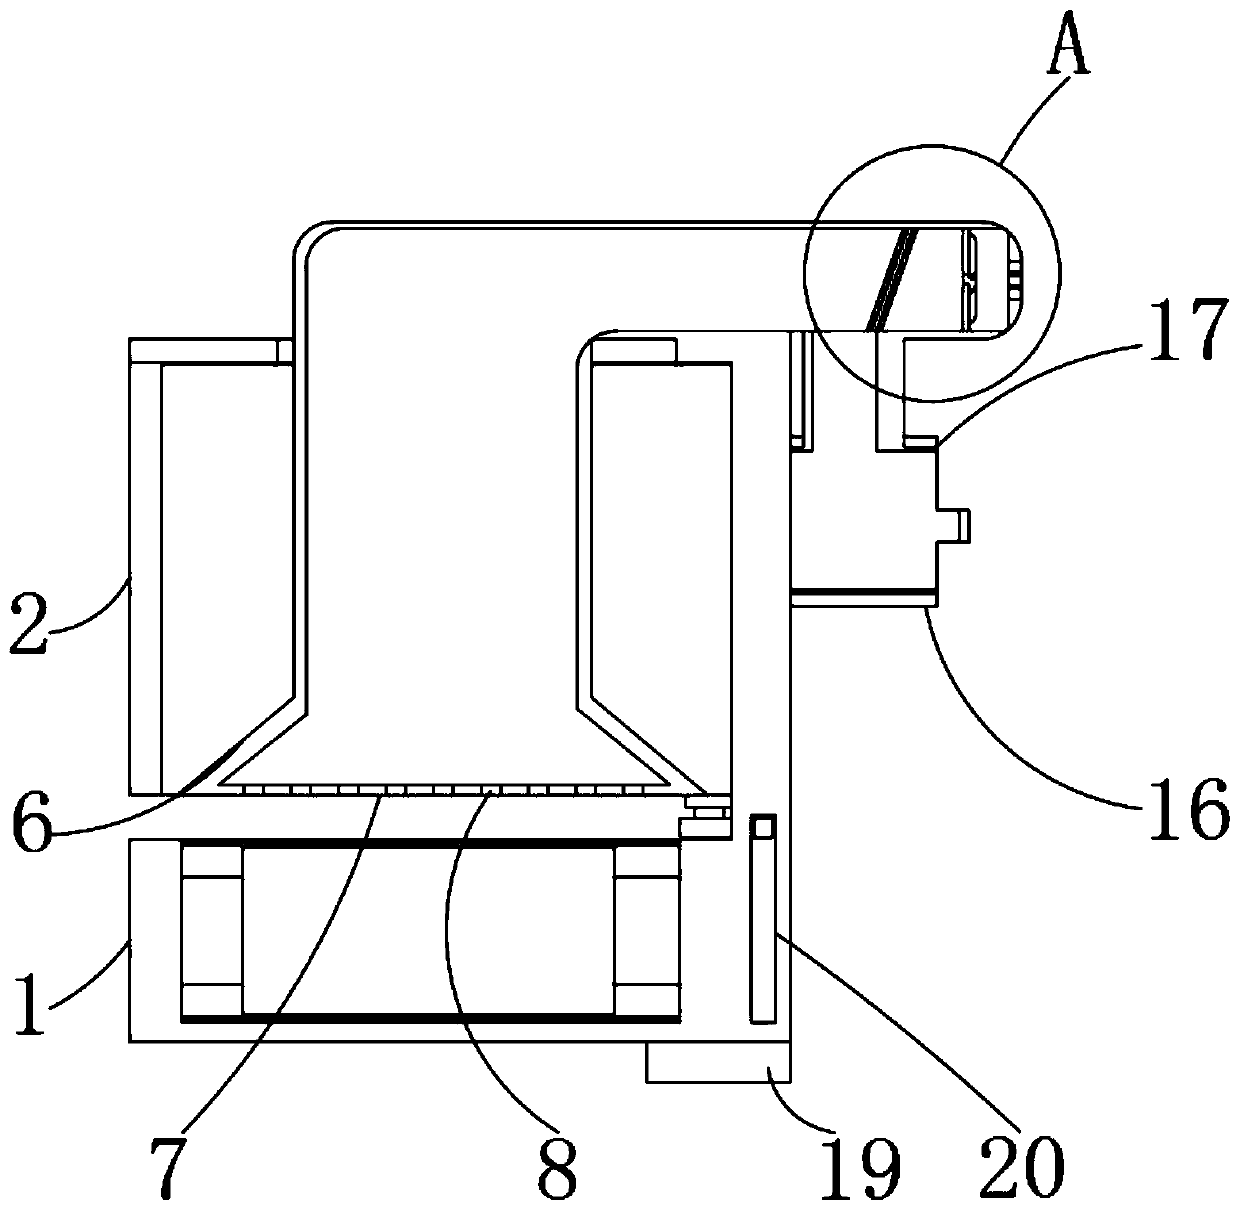 Detachable dust guide mechanism based on polishing machine